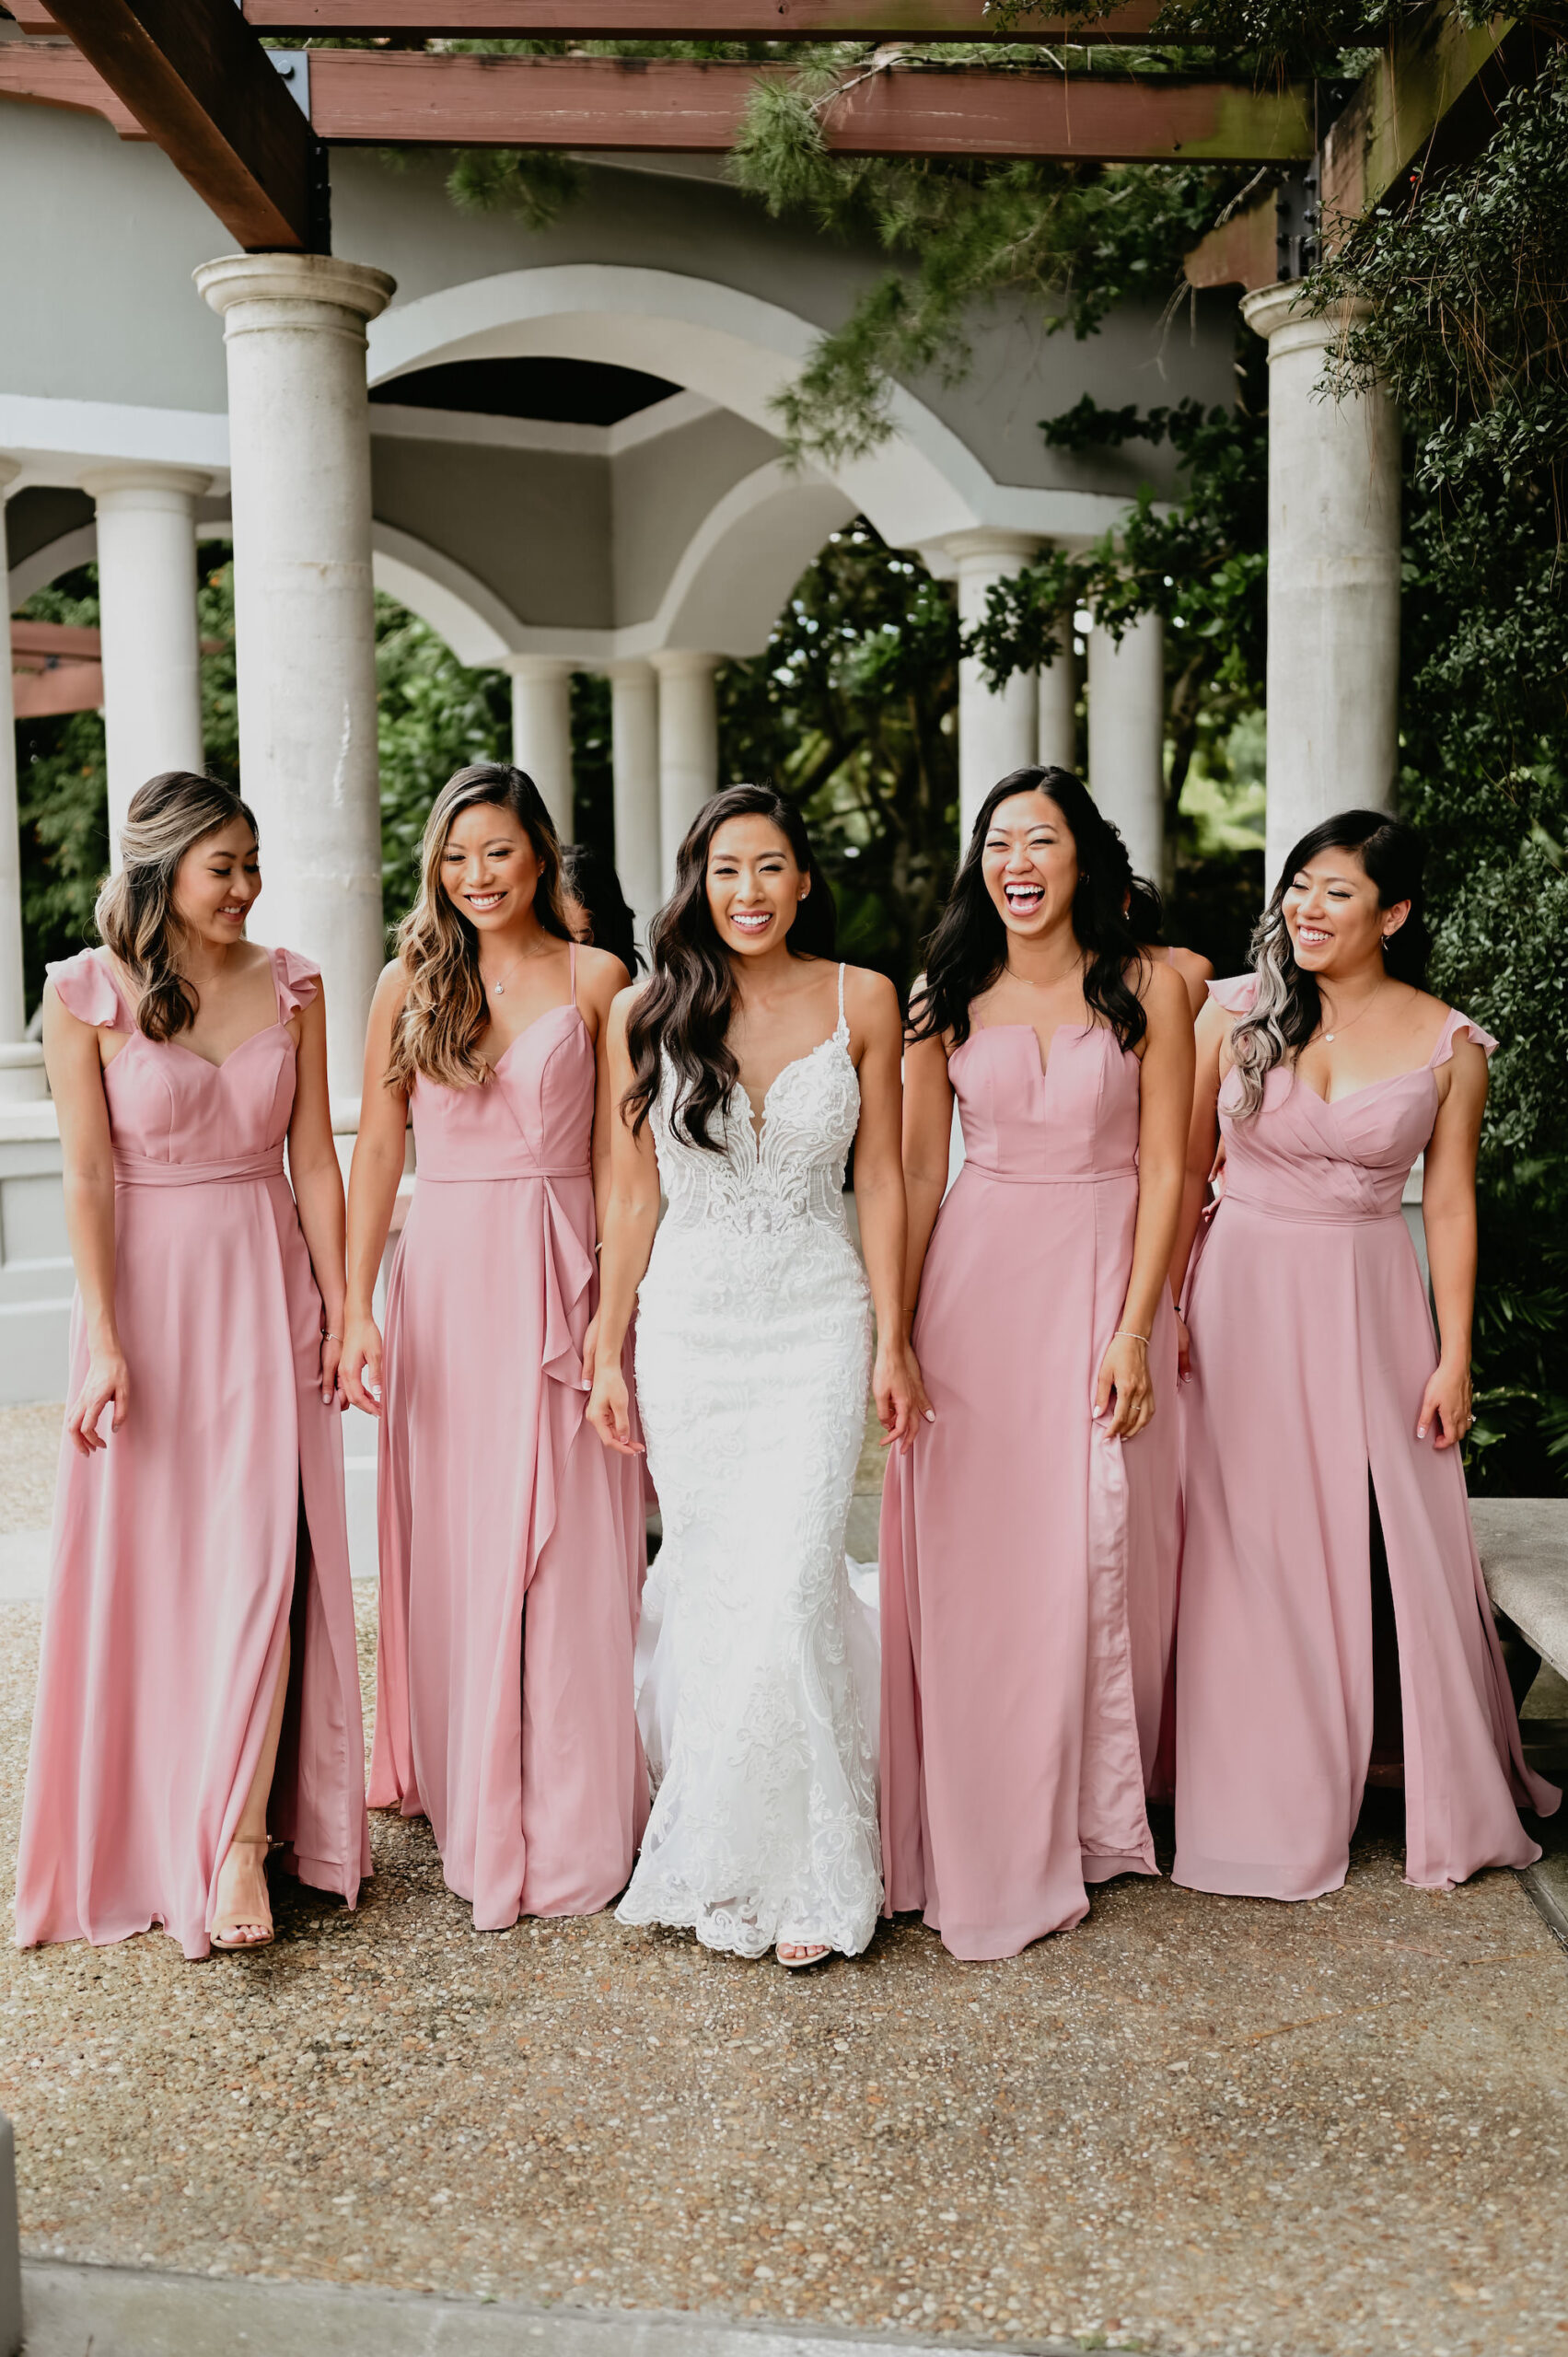 Bride with Bridesmaids in Floor Length Pink Bridesmaids Dresses Portrait